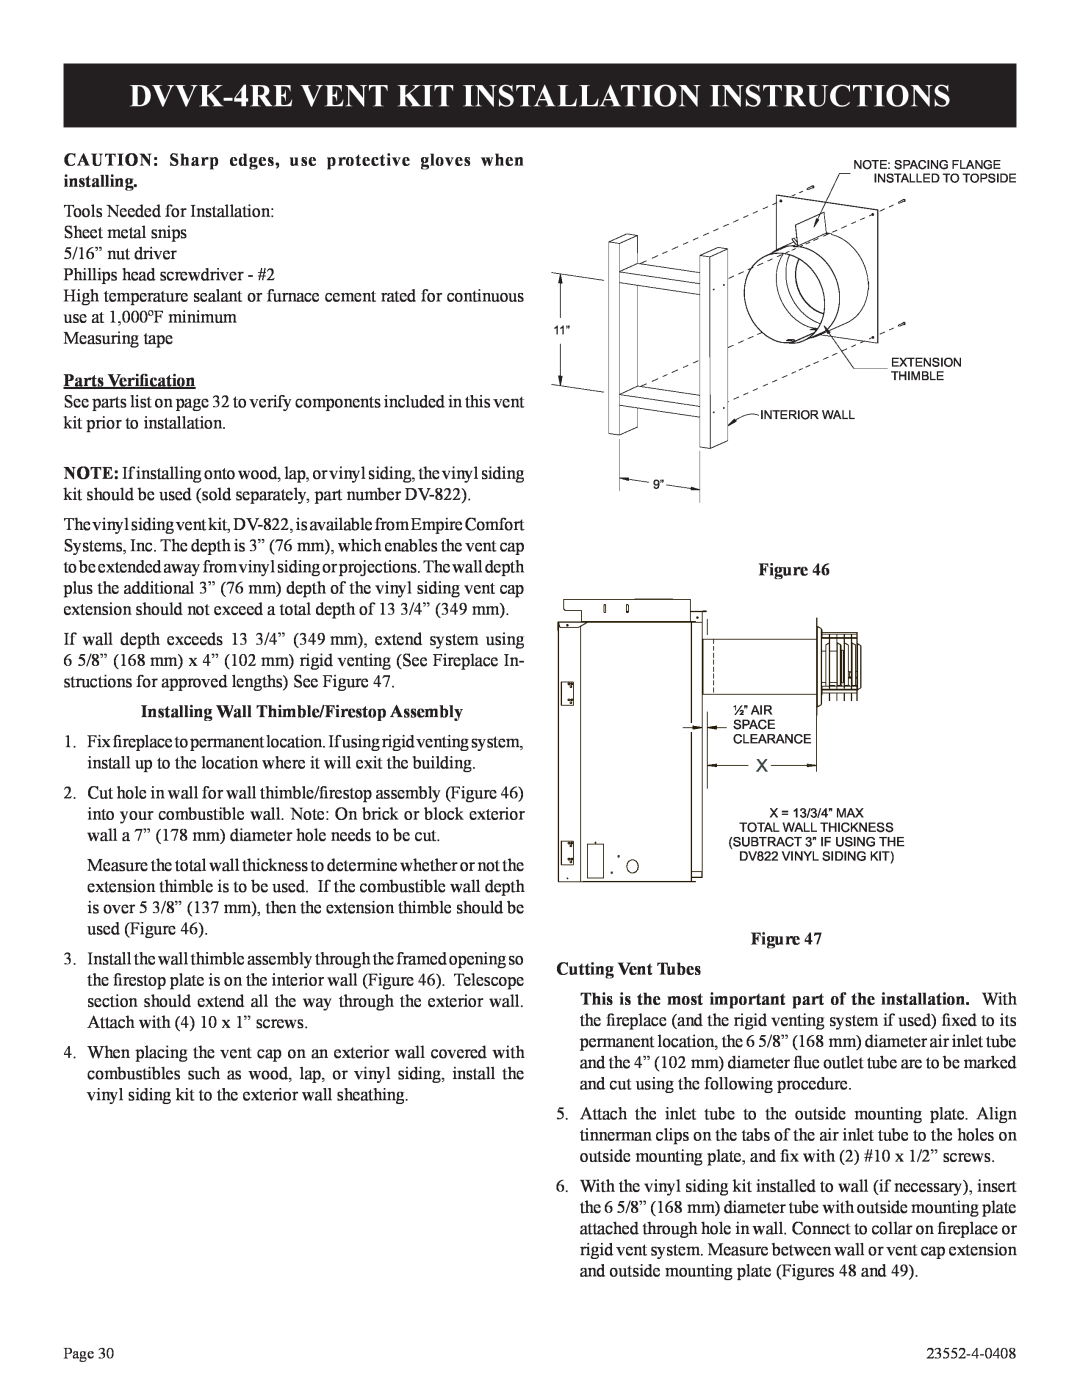 Empire Comfort Systems DVD32FP3 DVVK-4REVENT KIT INSTALLATION INSTRUCTIONS, Parts Veriﬁcation, Figure Cutting Vent Tubes 